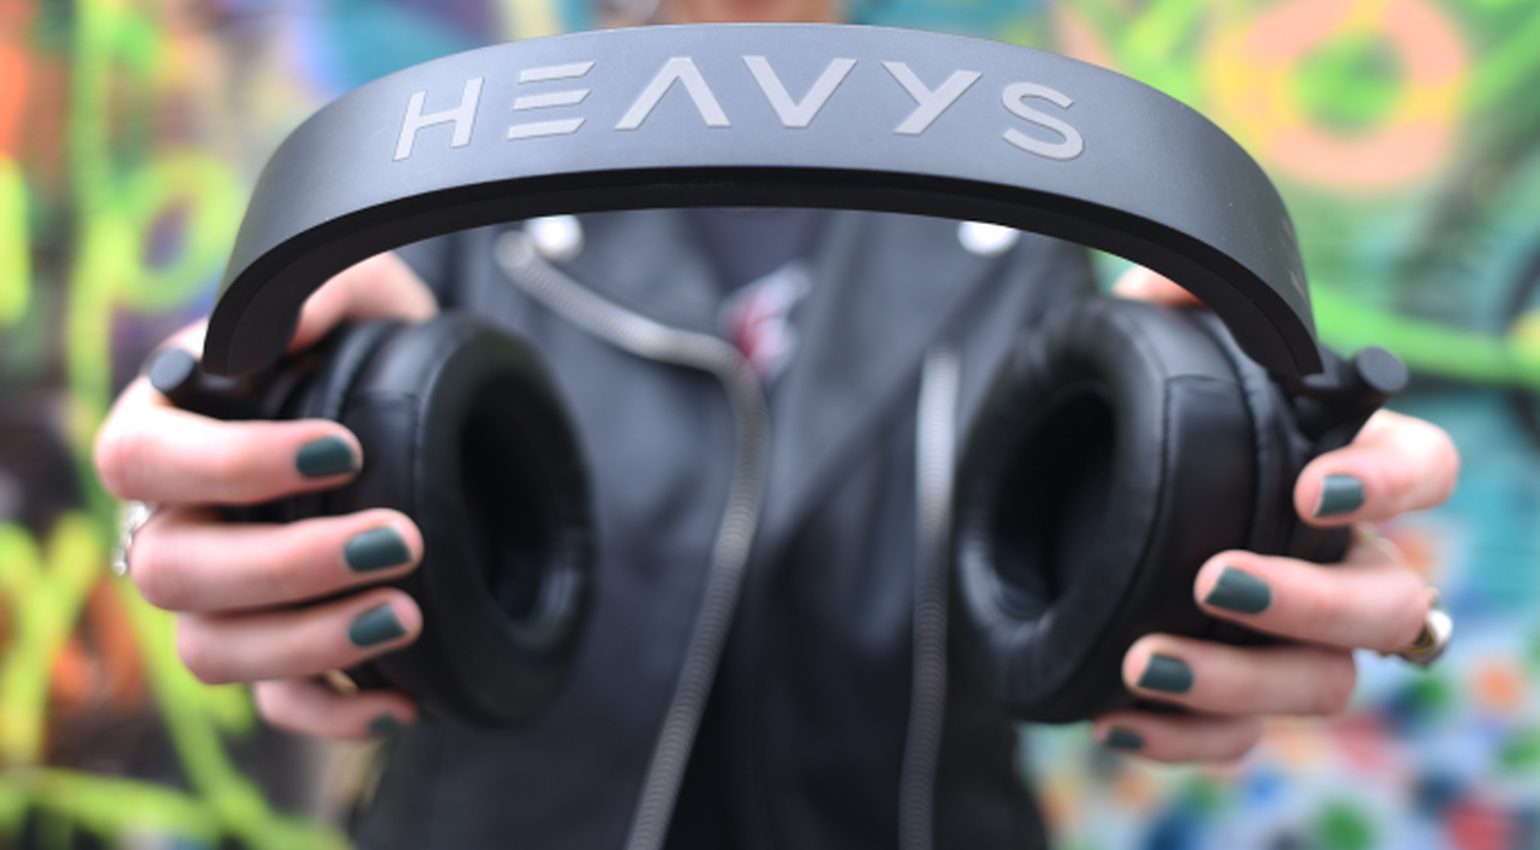 HEAVYS metal headphones